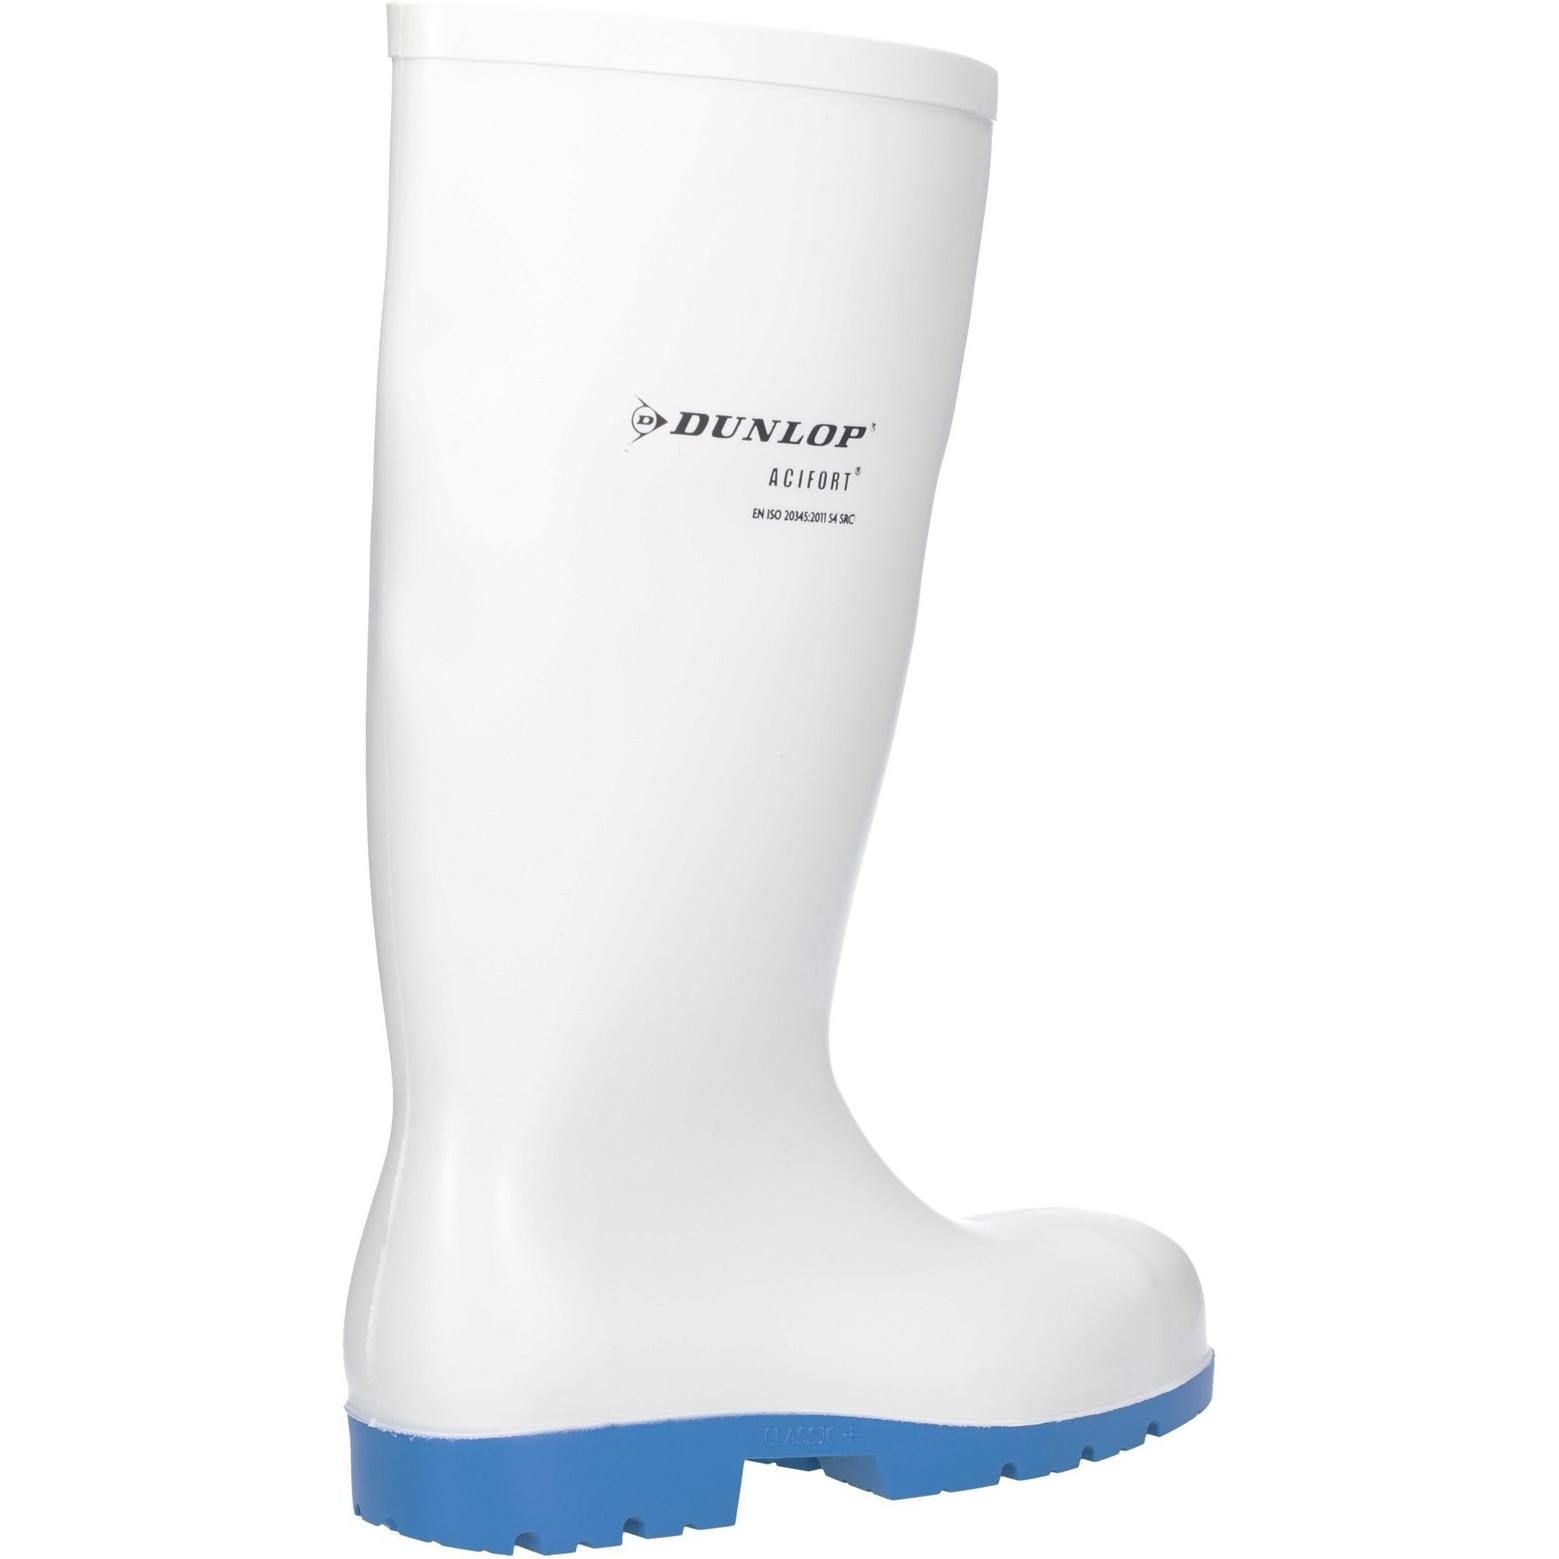 Dunlop Acifort Classic+ Waterproof Safety Wellington Boots